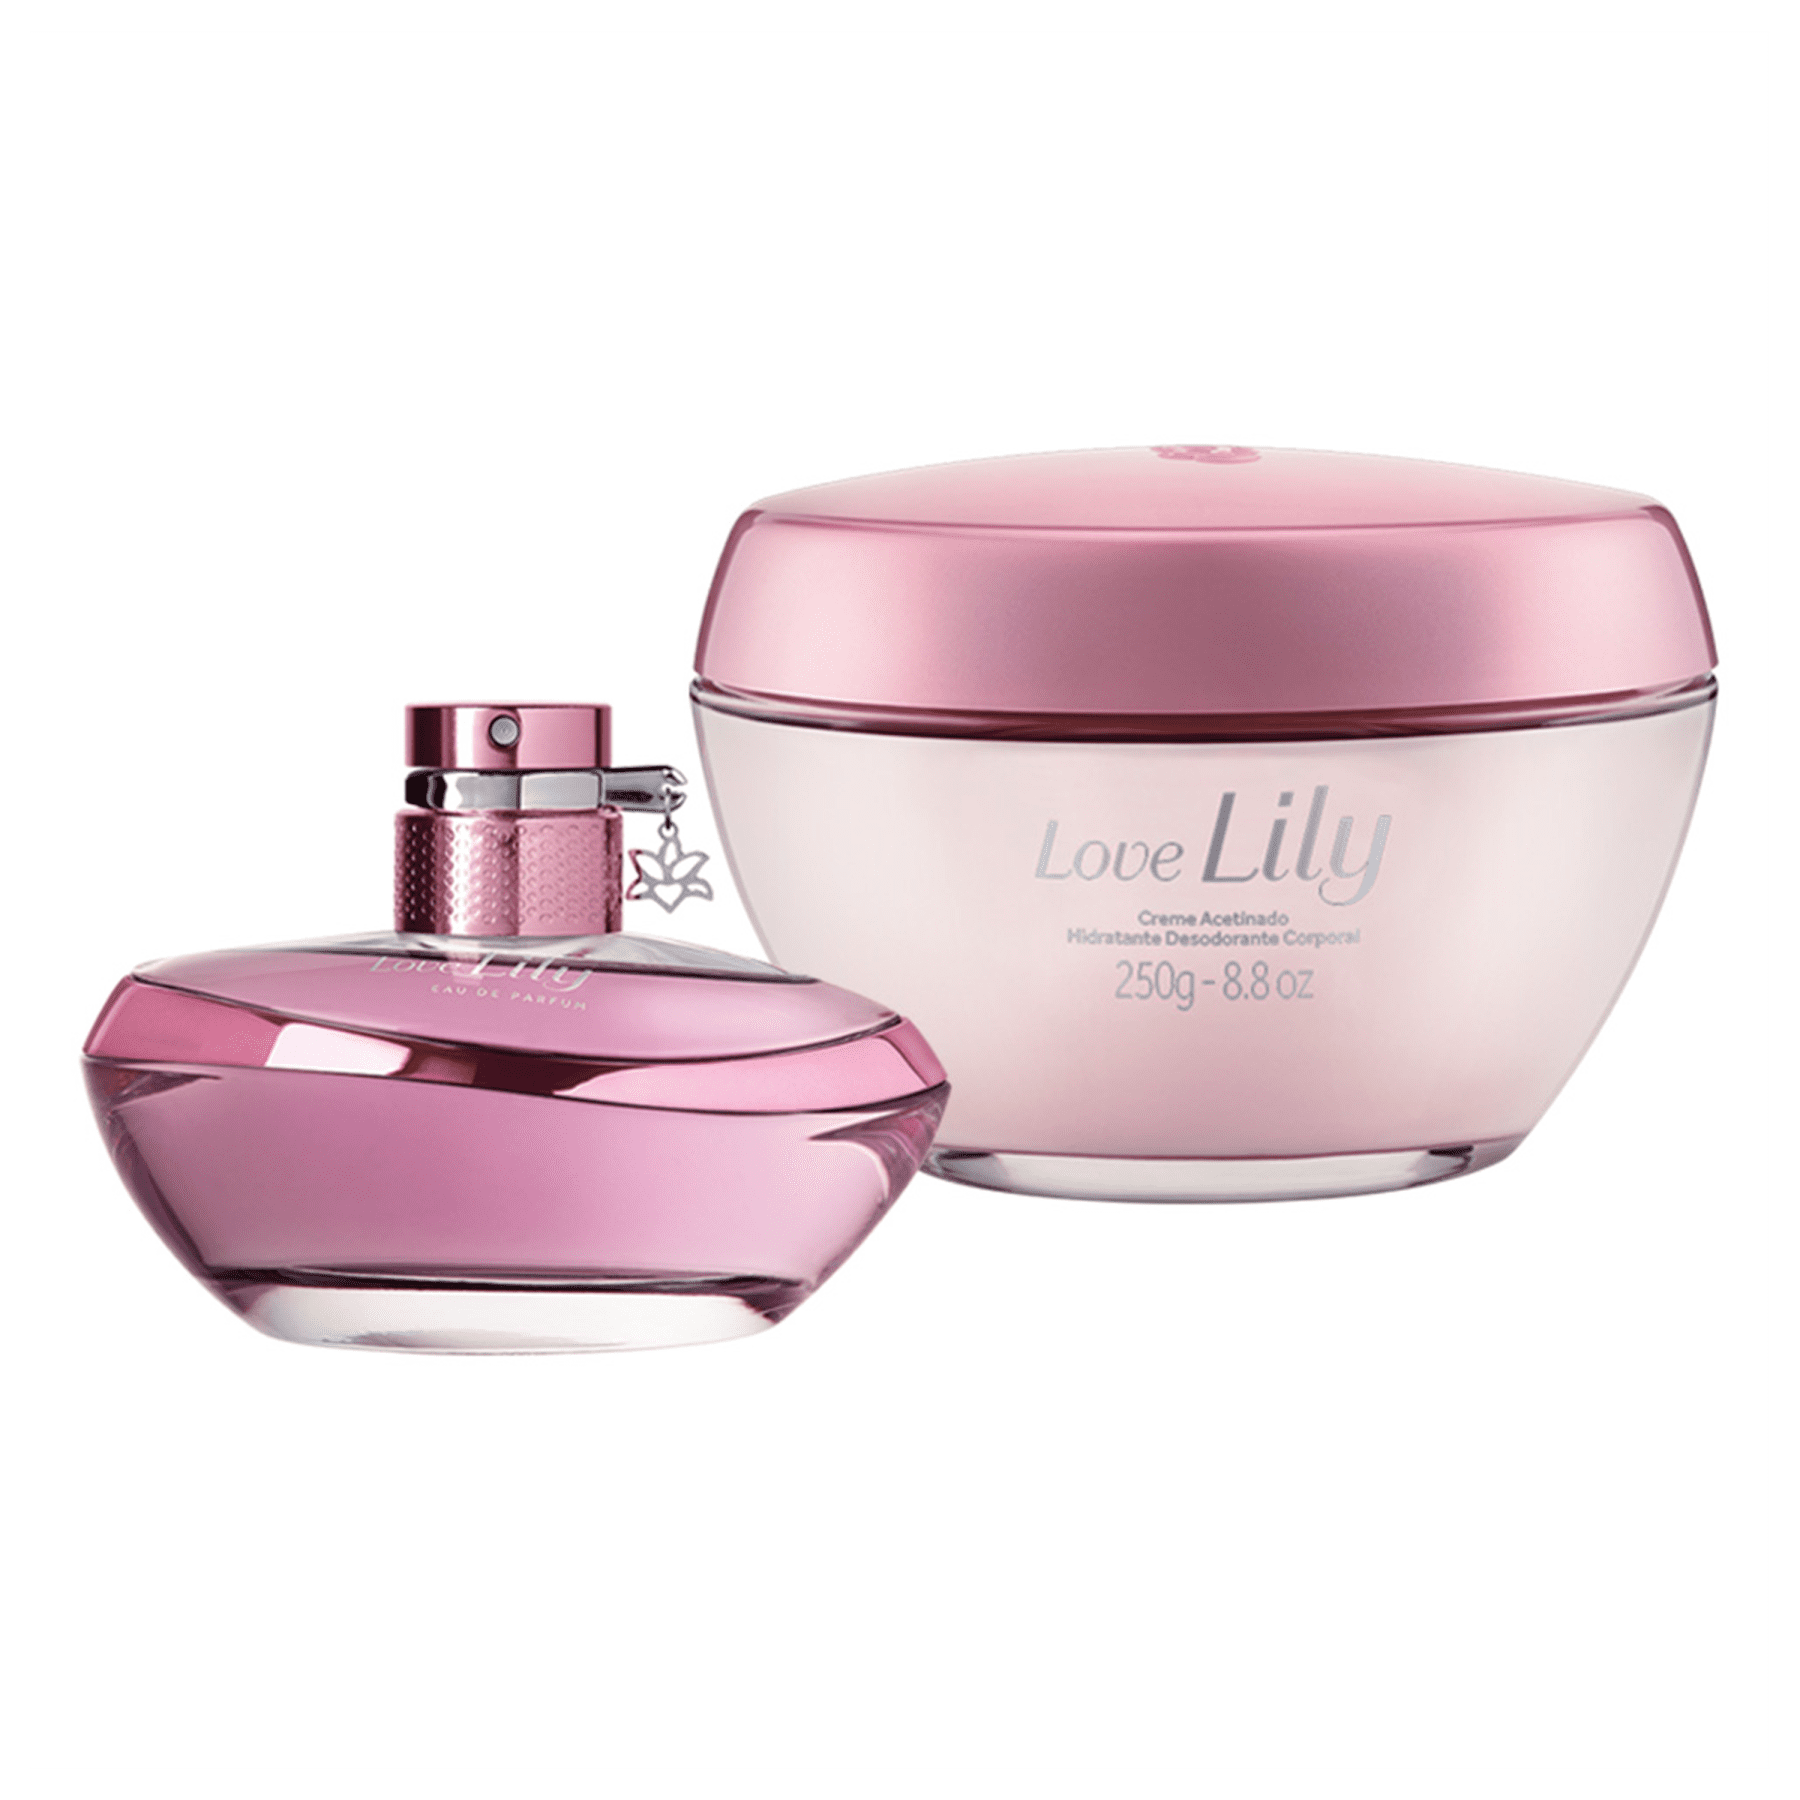 Kit Love Lily: Eau De Parfum + Cream Moisturizing Cream Body Deodorant - o Boticario